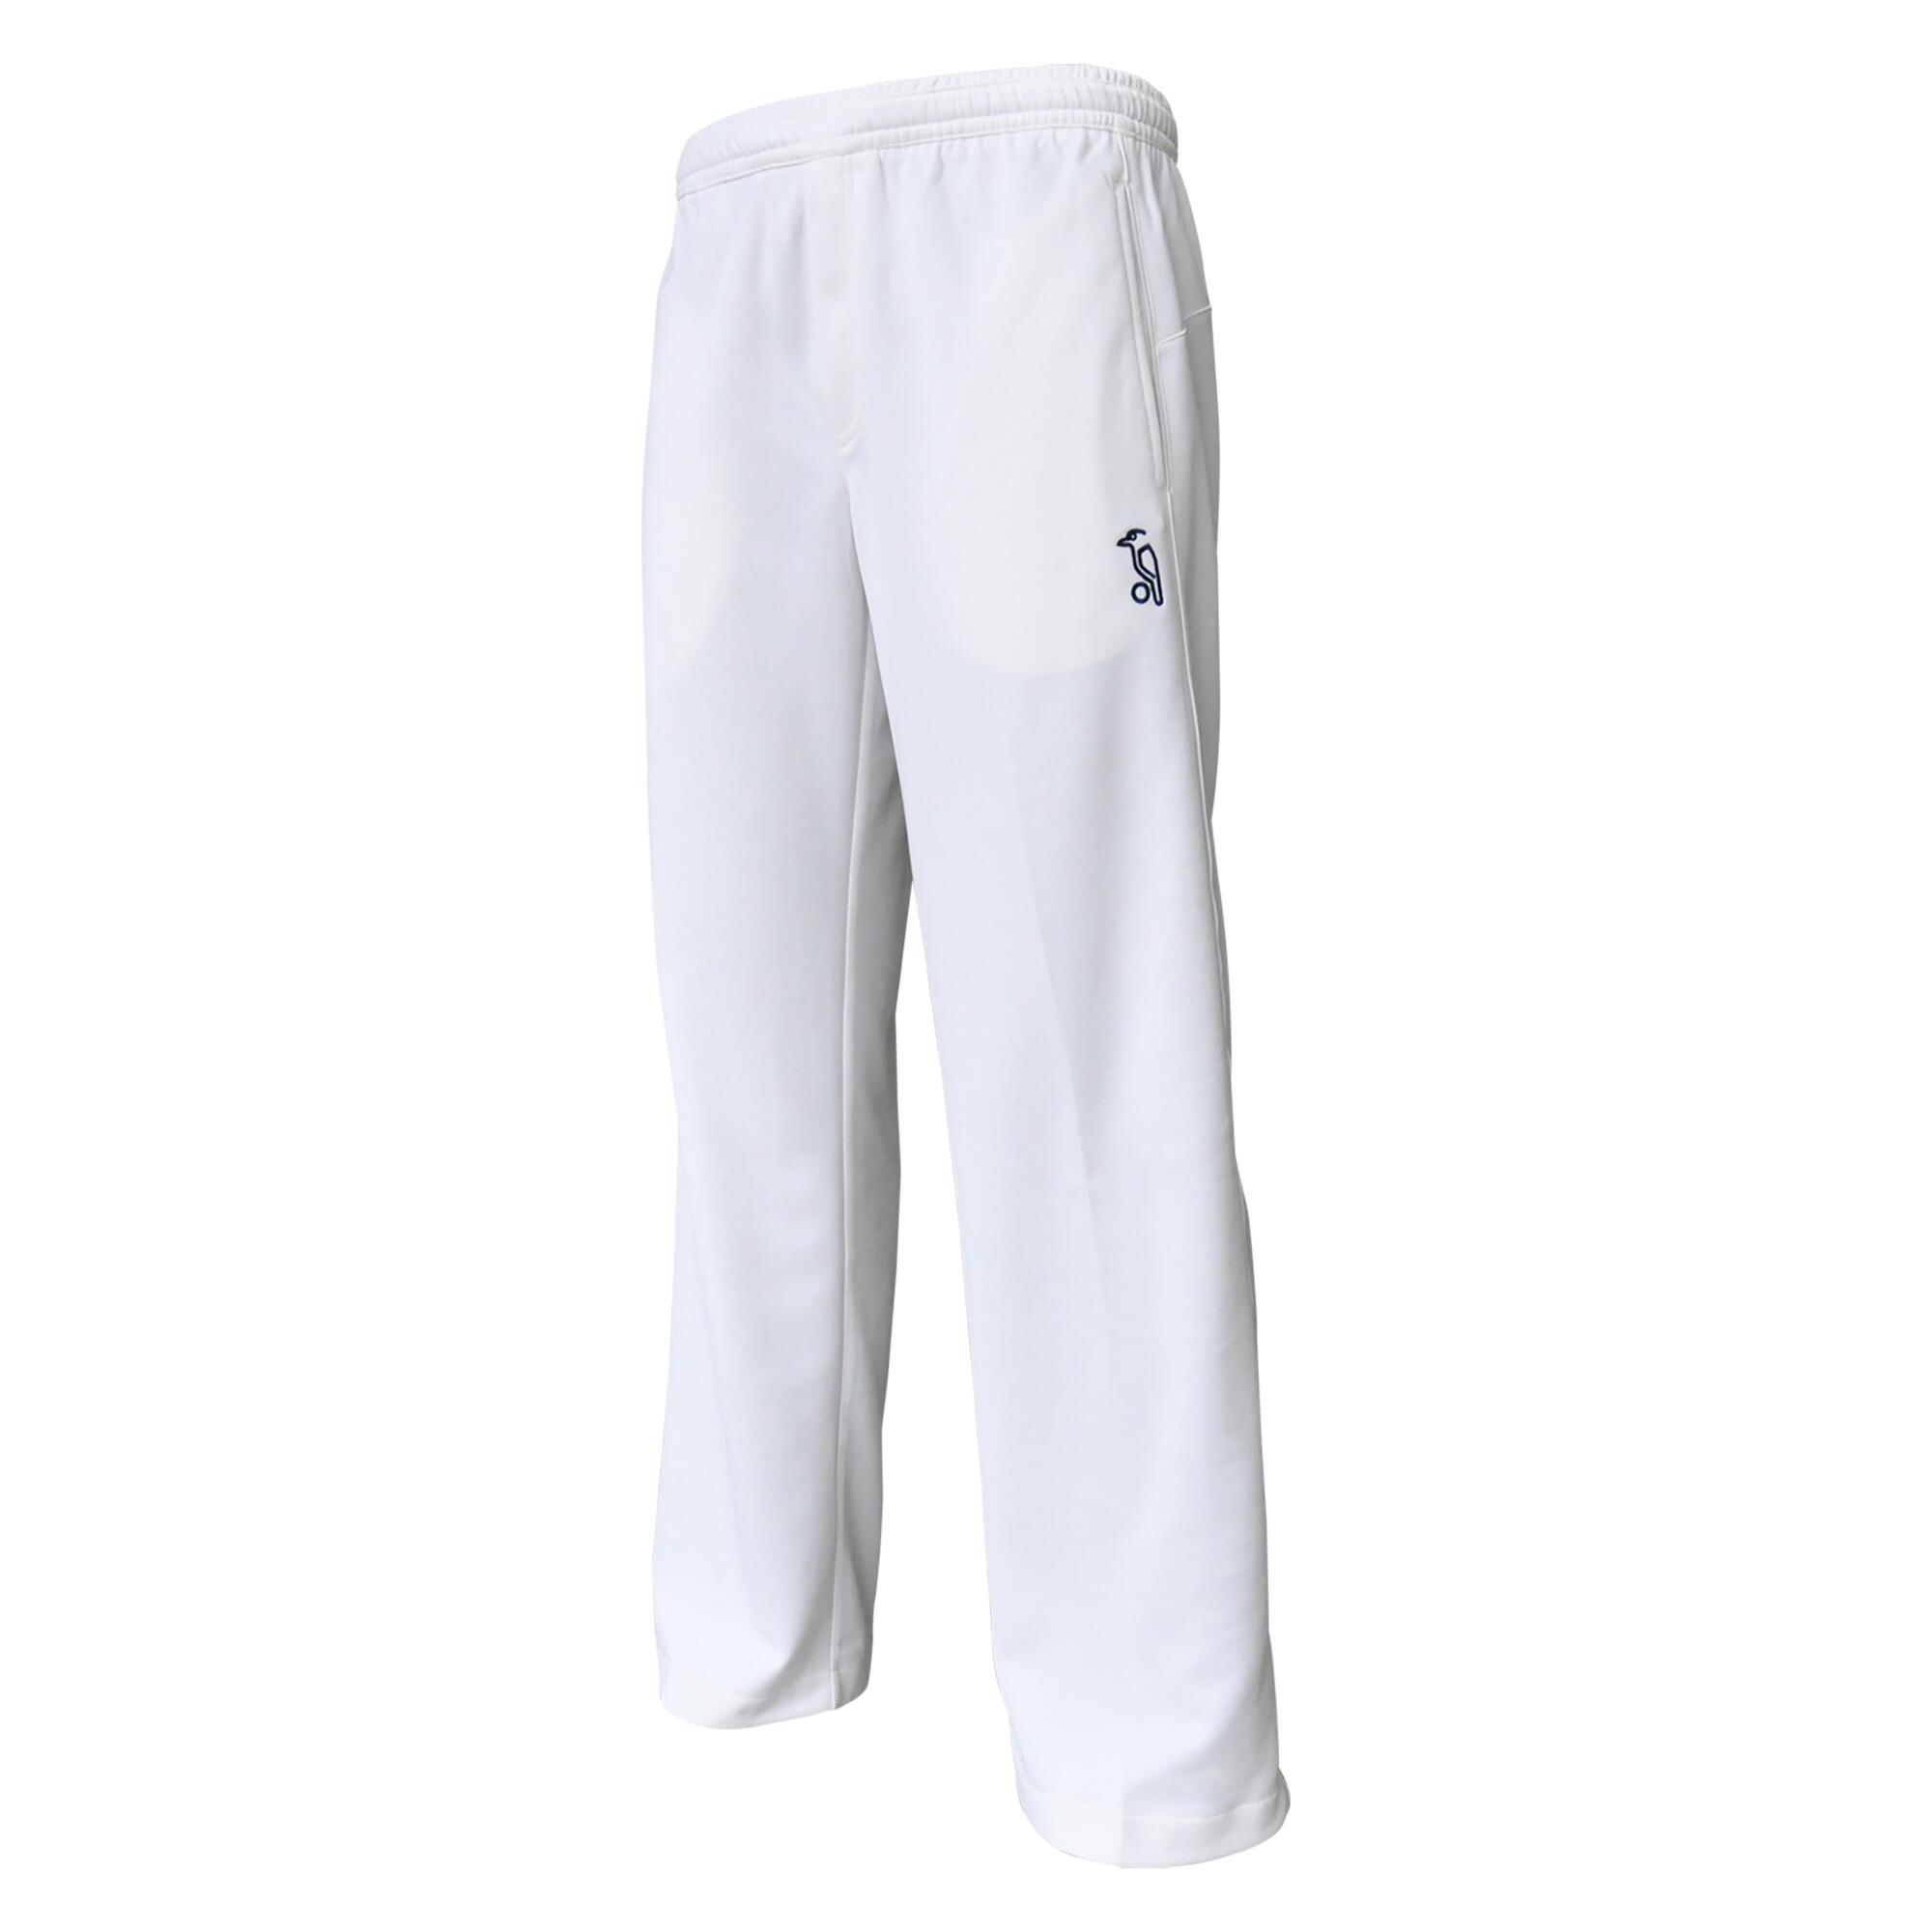 Kookaburra Pro Player Cricket Trousers White 1/2